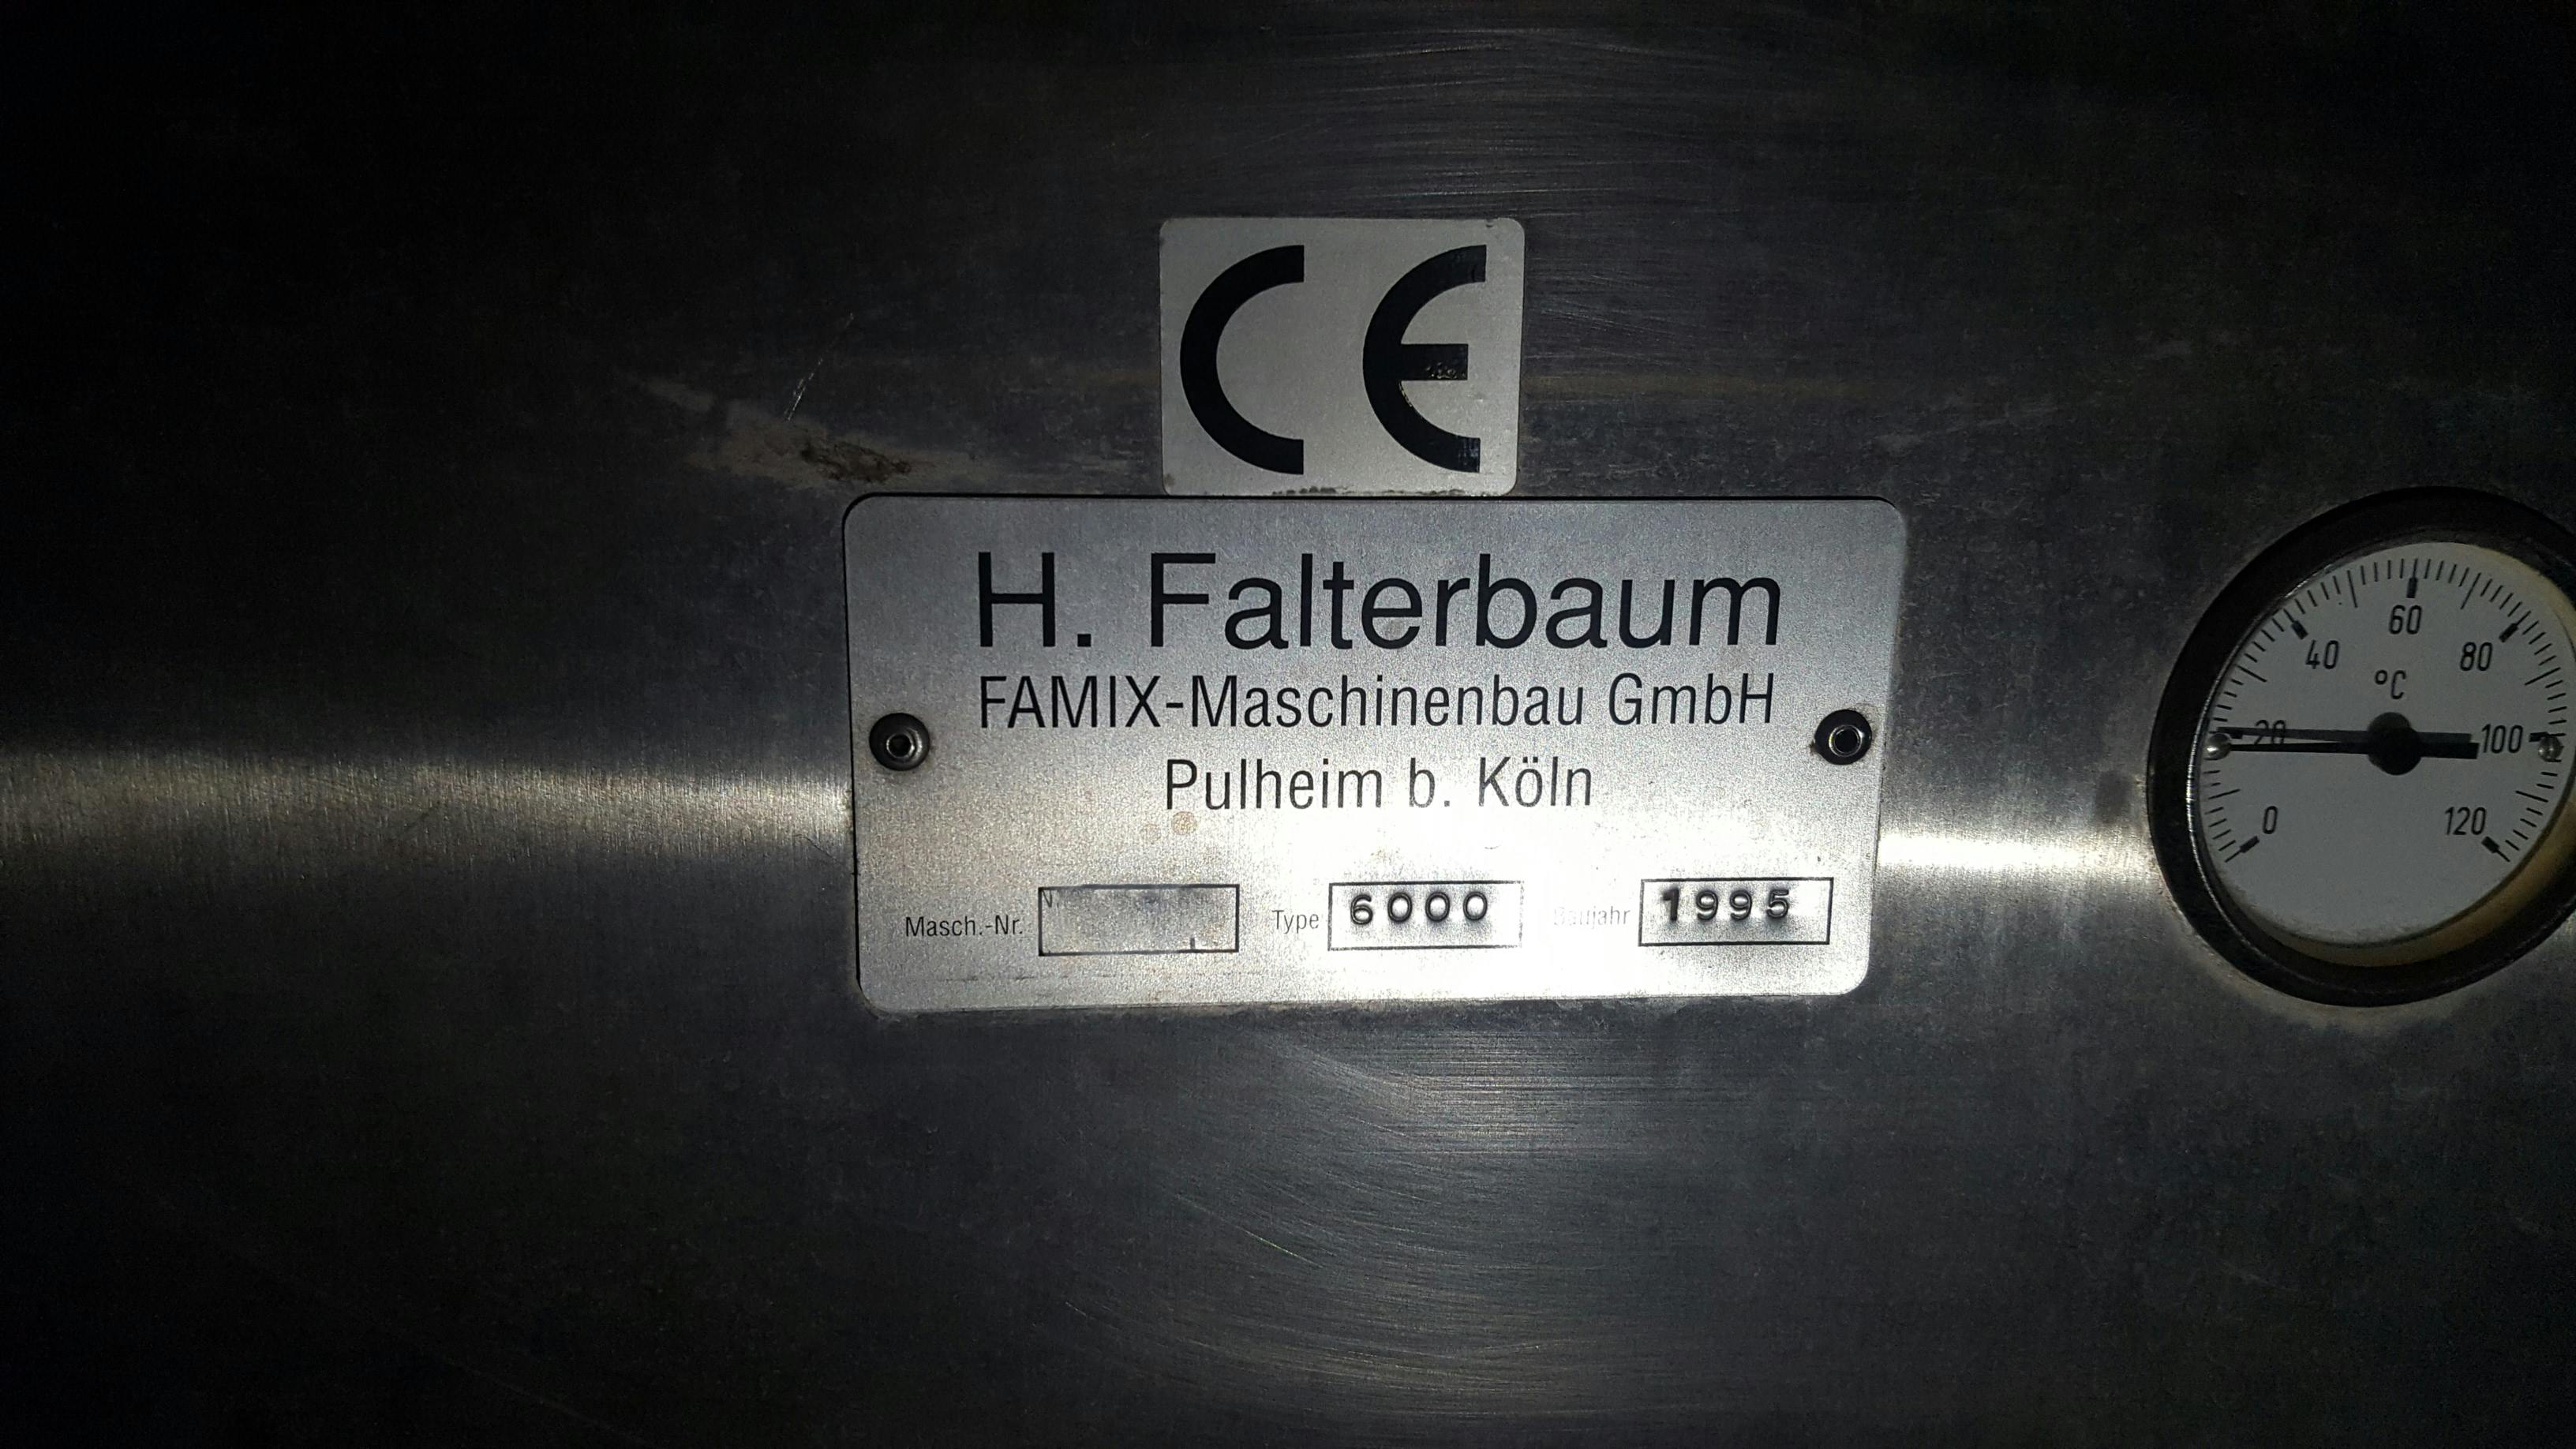 Nameplate of H. FALTERBAUM FAMIX-MASCHINENBAU GMBH Famix 6000